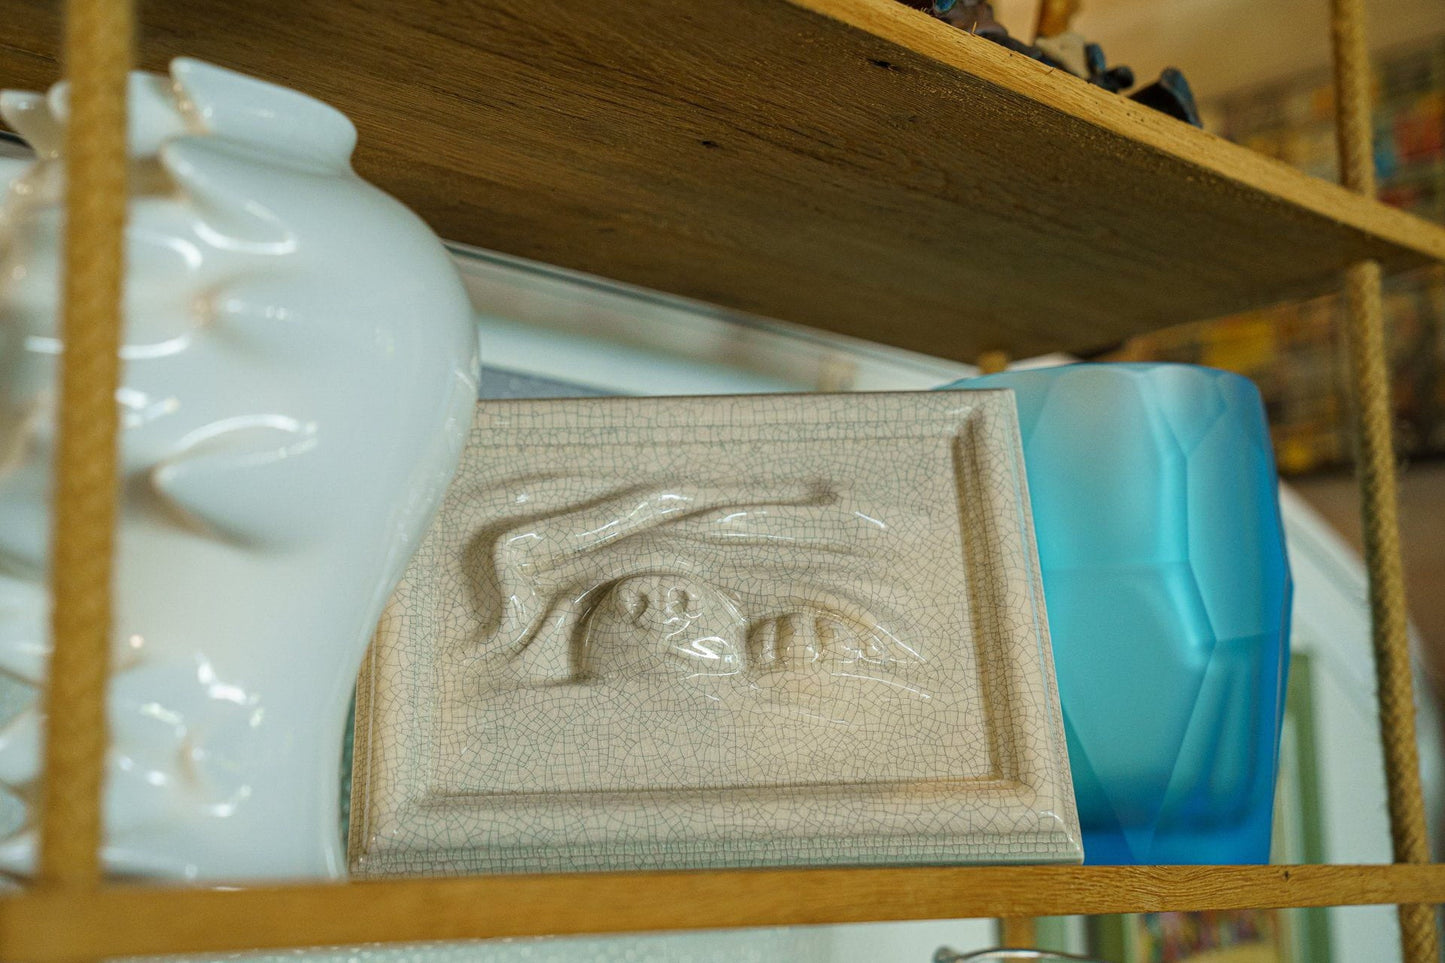 
                  
                    Dog Cremation Urn for Ashes - Craquelure | Ceramic | Handmade
                  
                